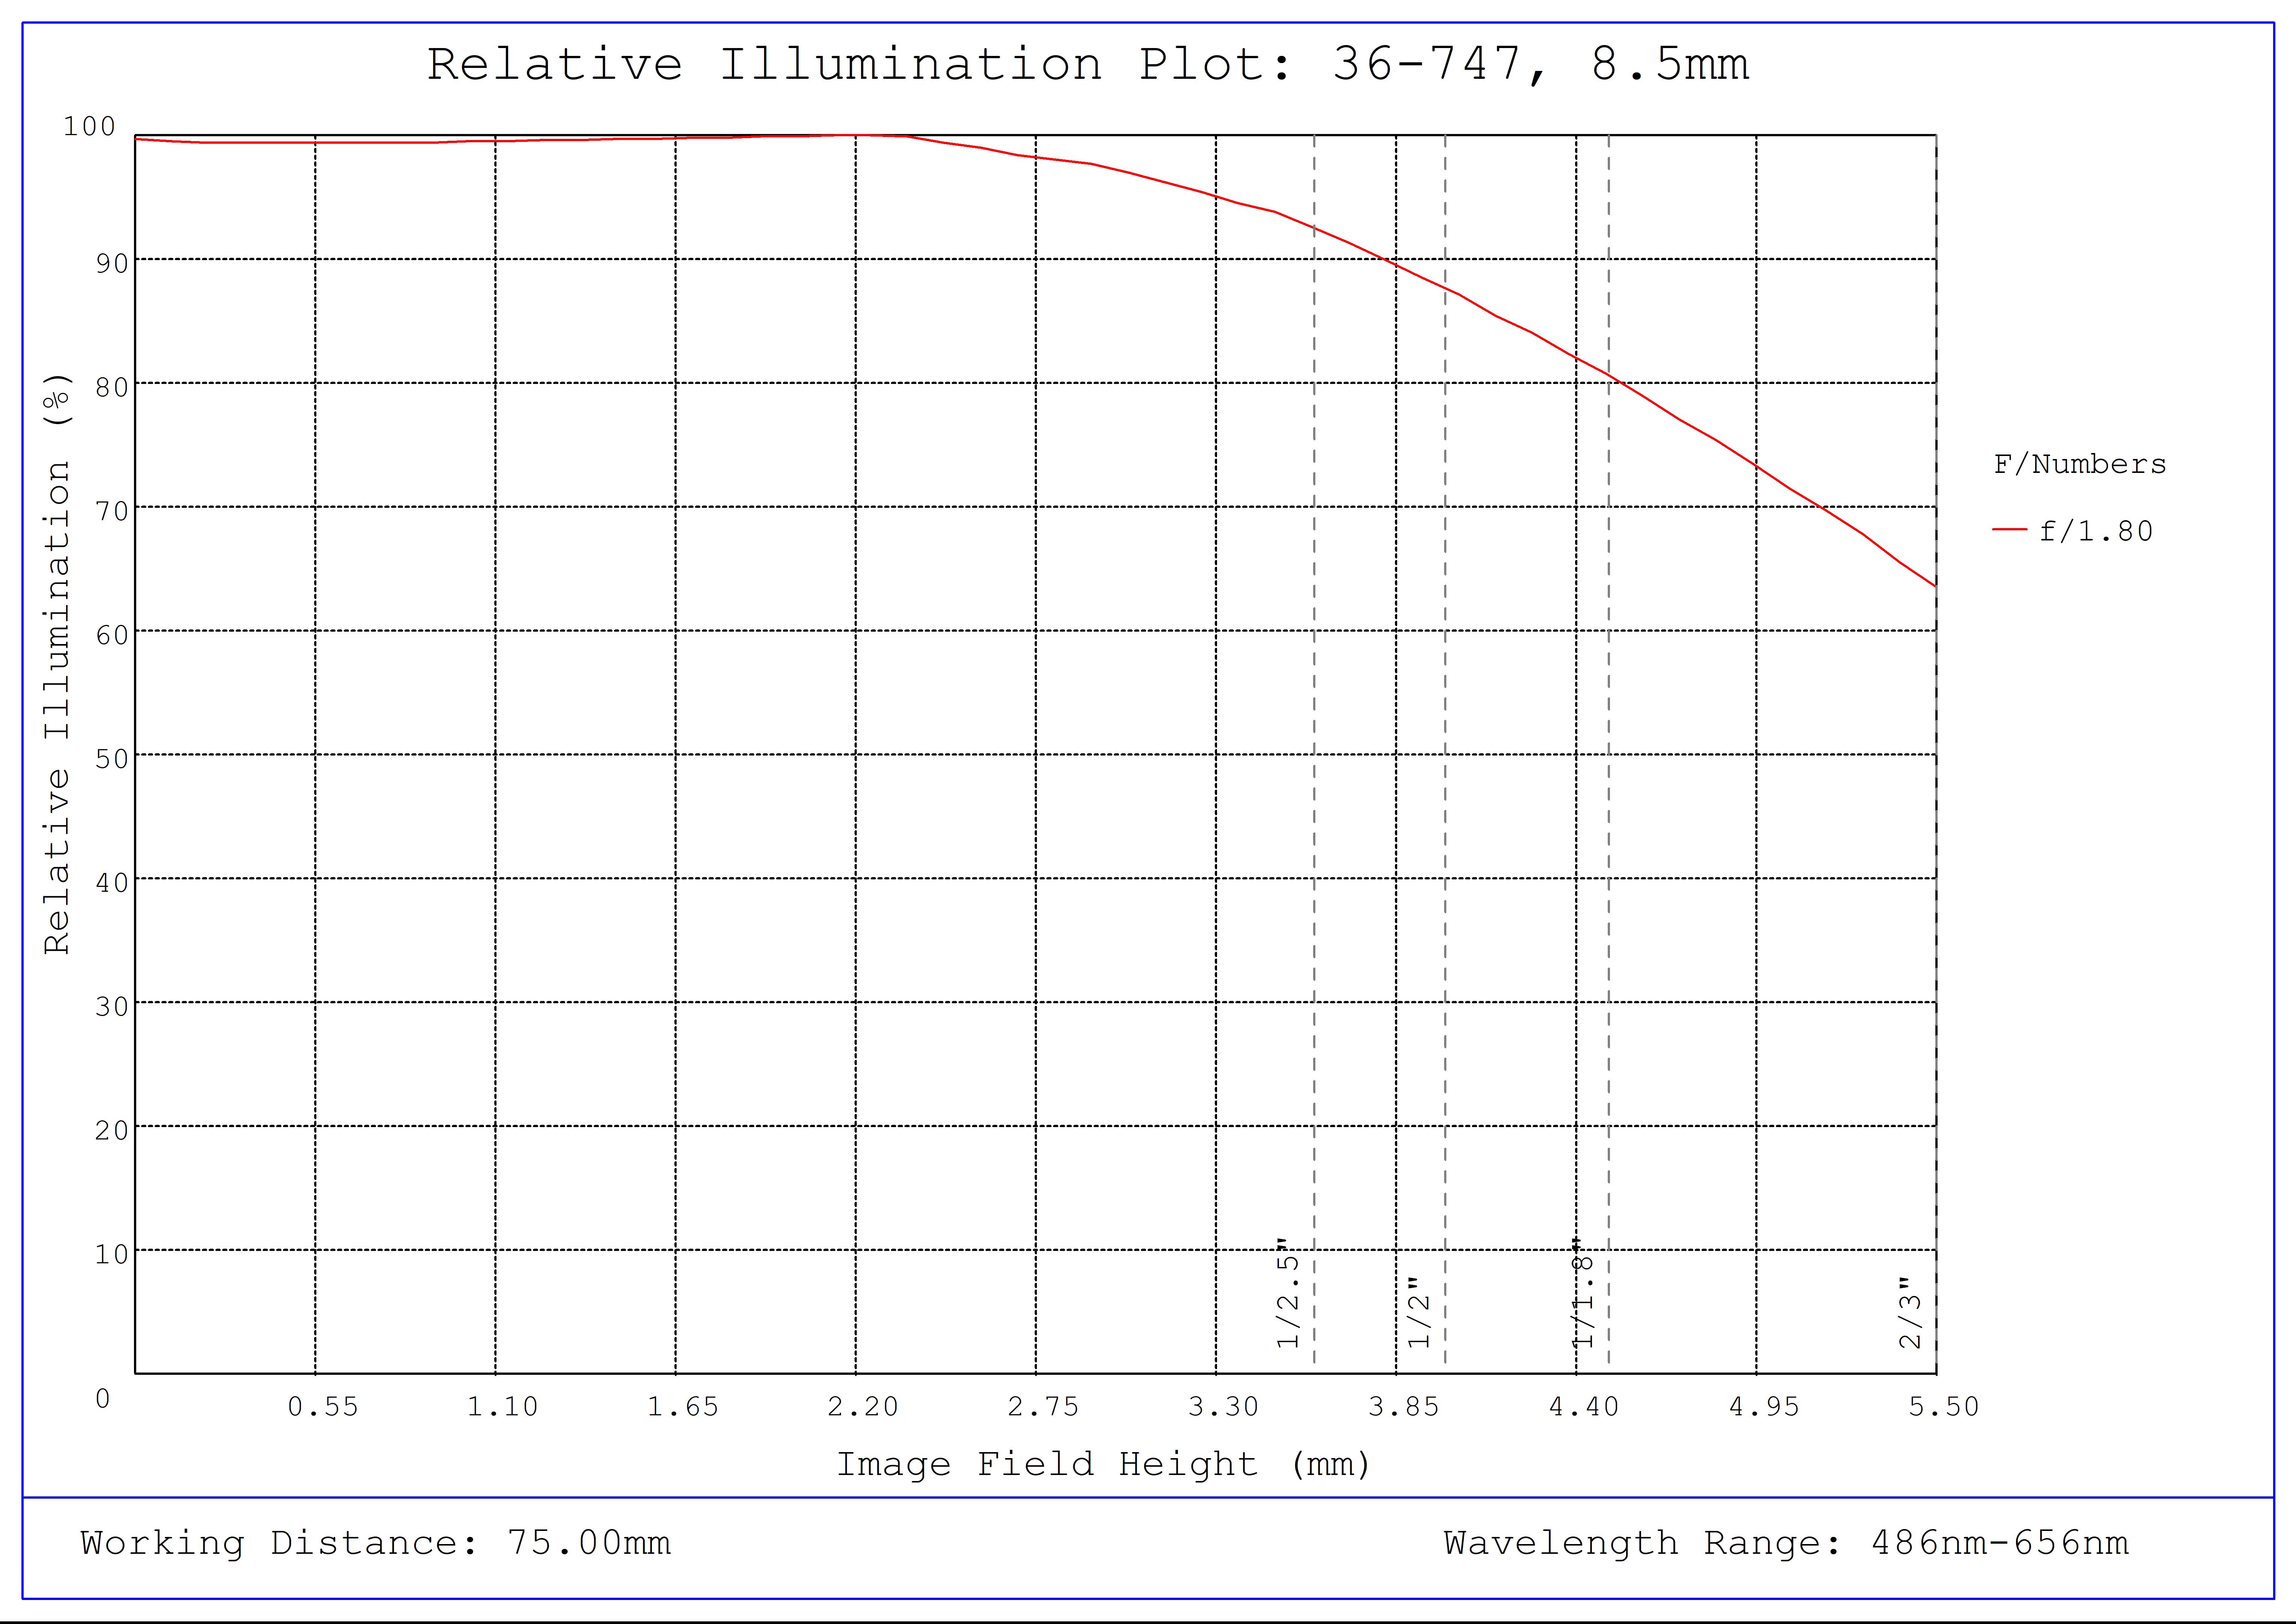 #36-747, 8.5mm f/1.8, 75mm-∞ Primary WD, HRi Series Fixed Focal Length Lens, Relative Illumination Plot